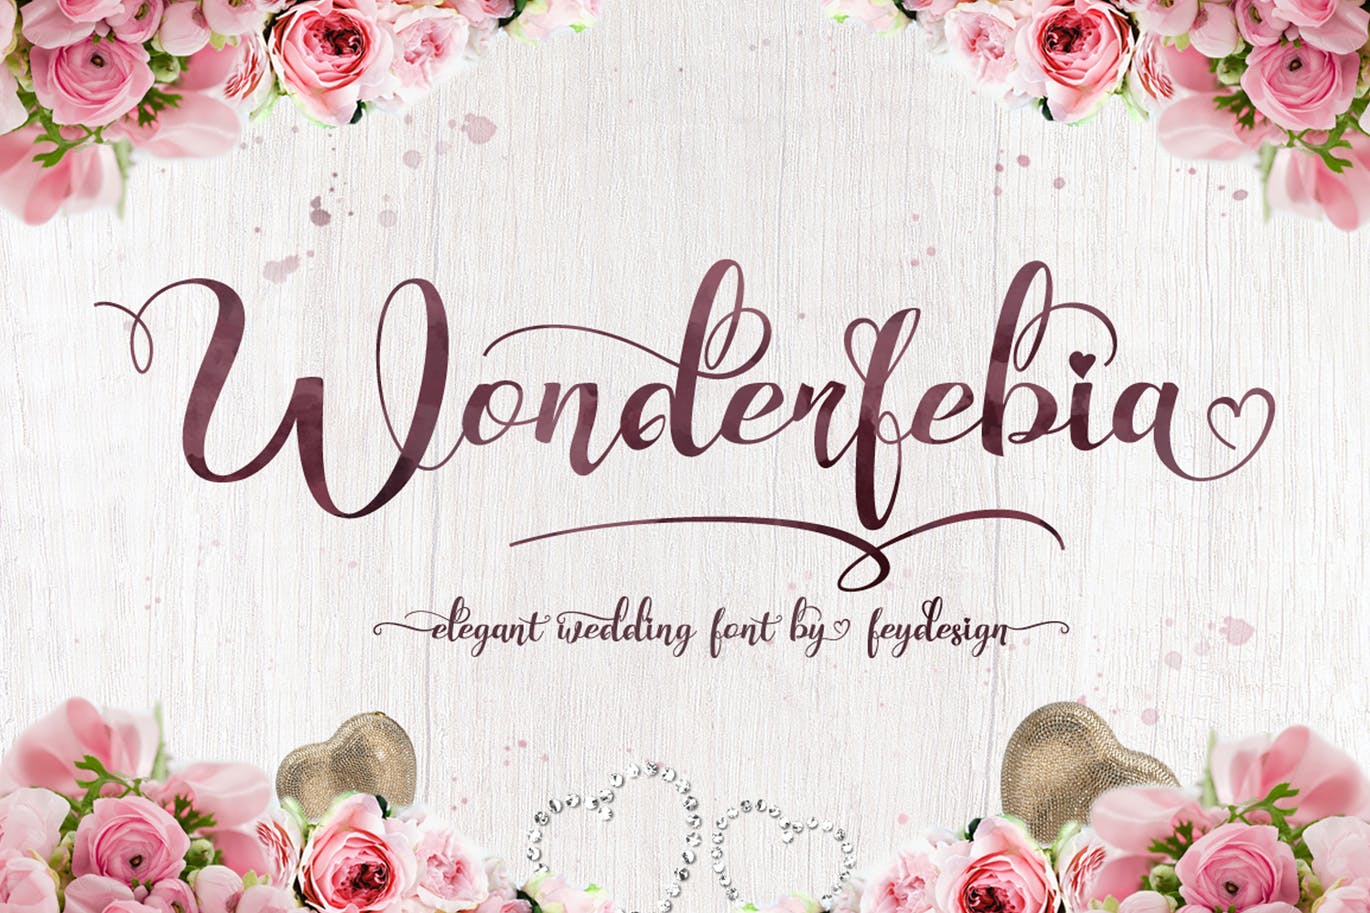 An elegant wedding font